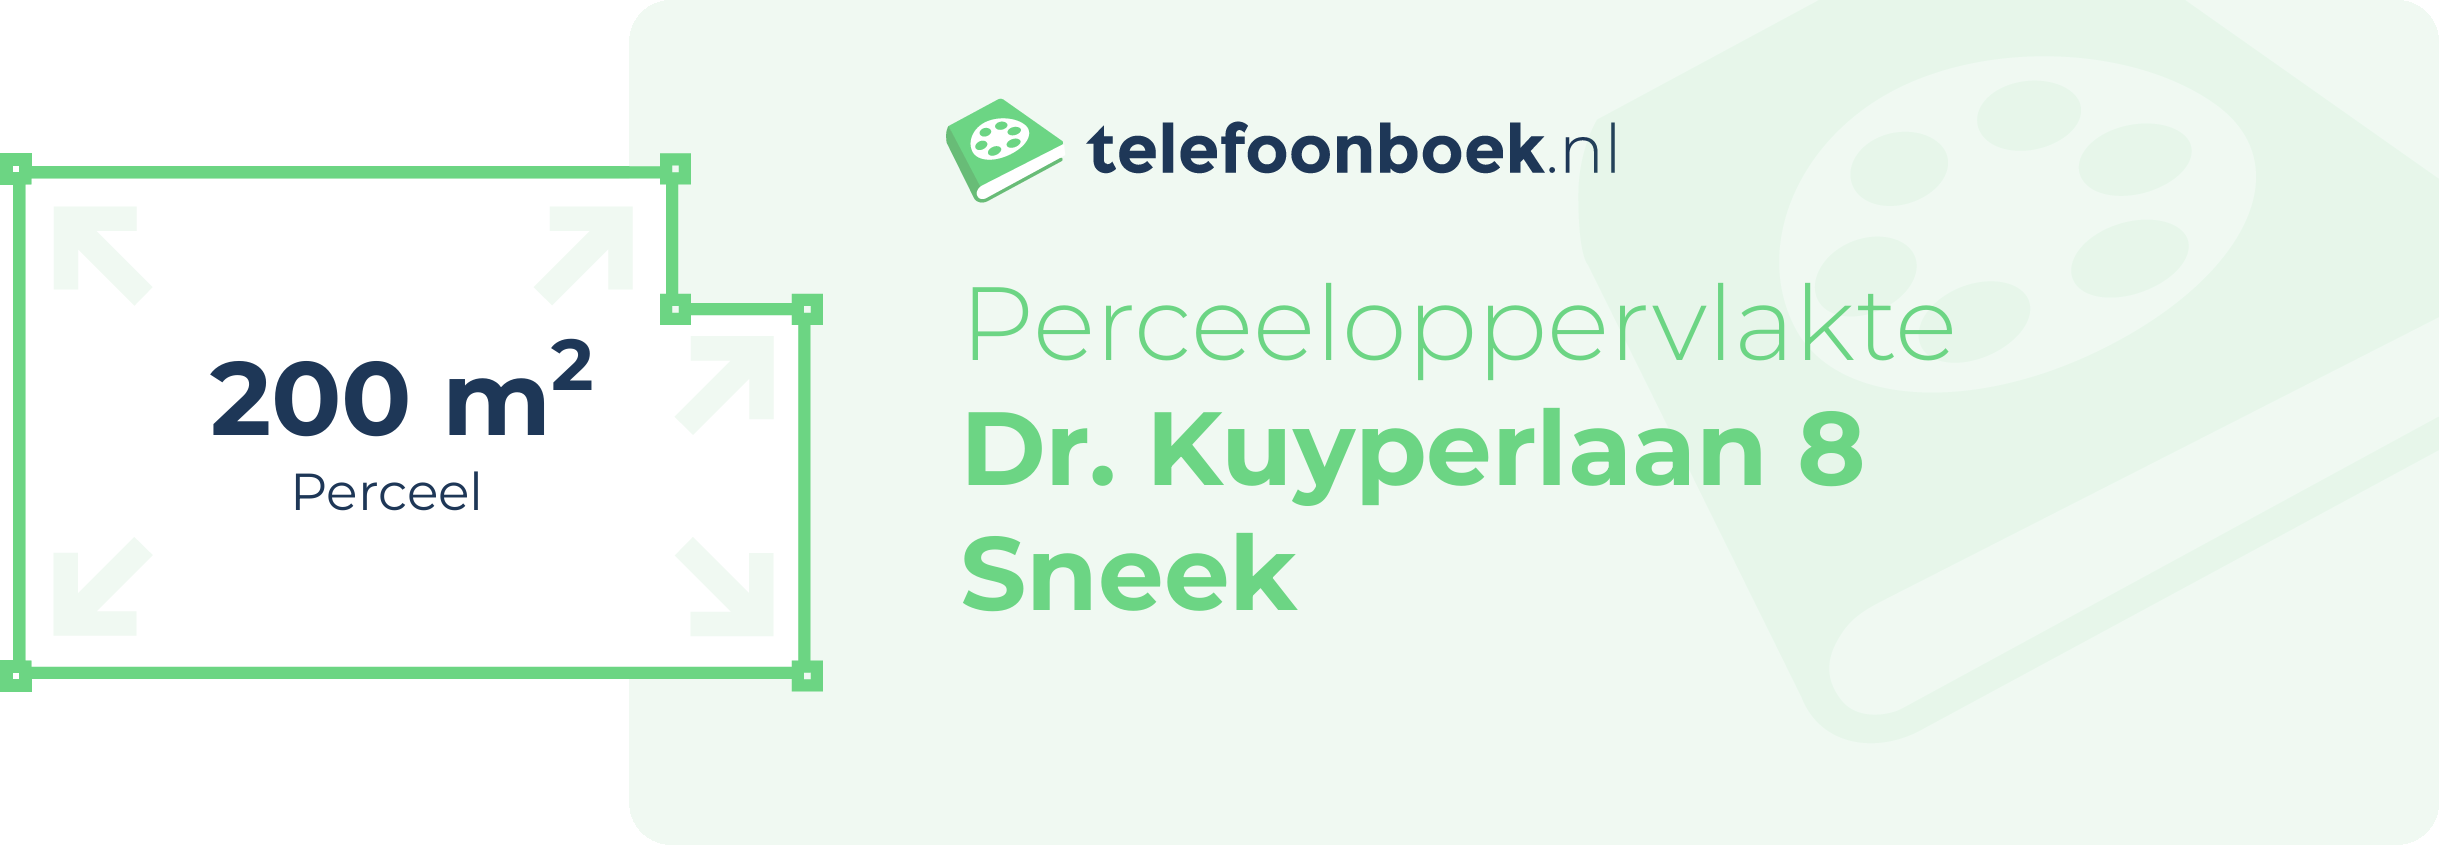 Perceeloppervlakte Dr. Kuyperlaan 8 Sneek